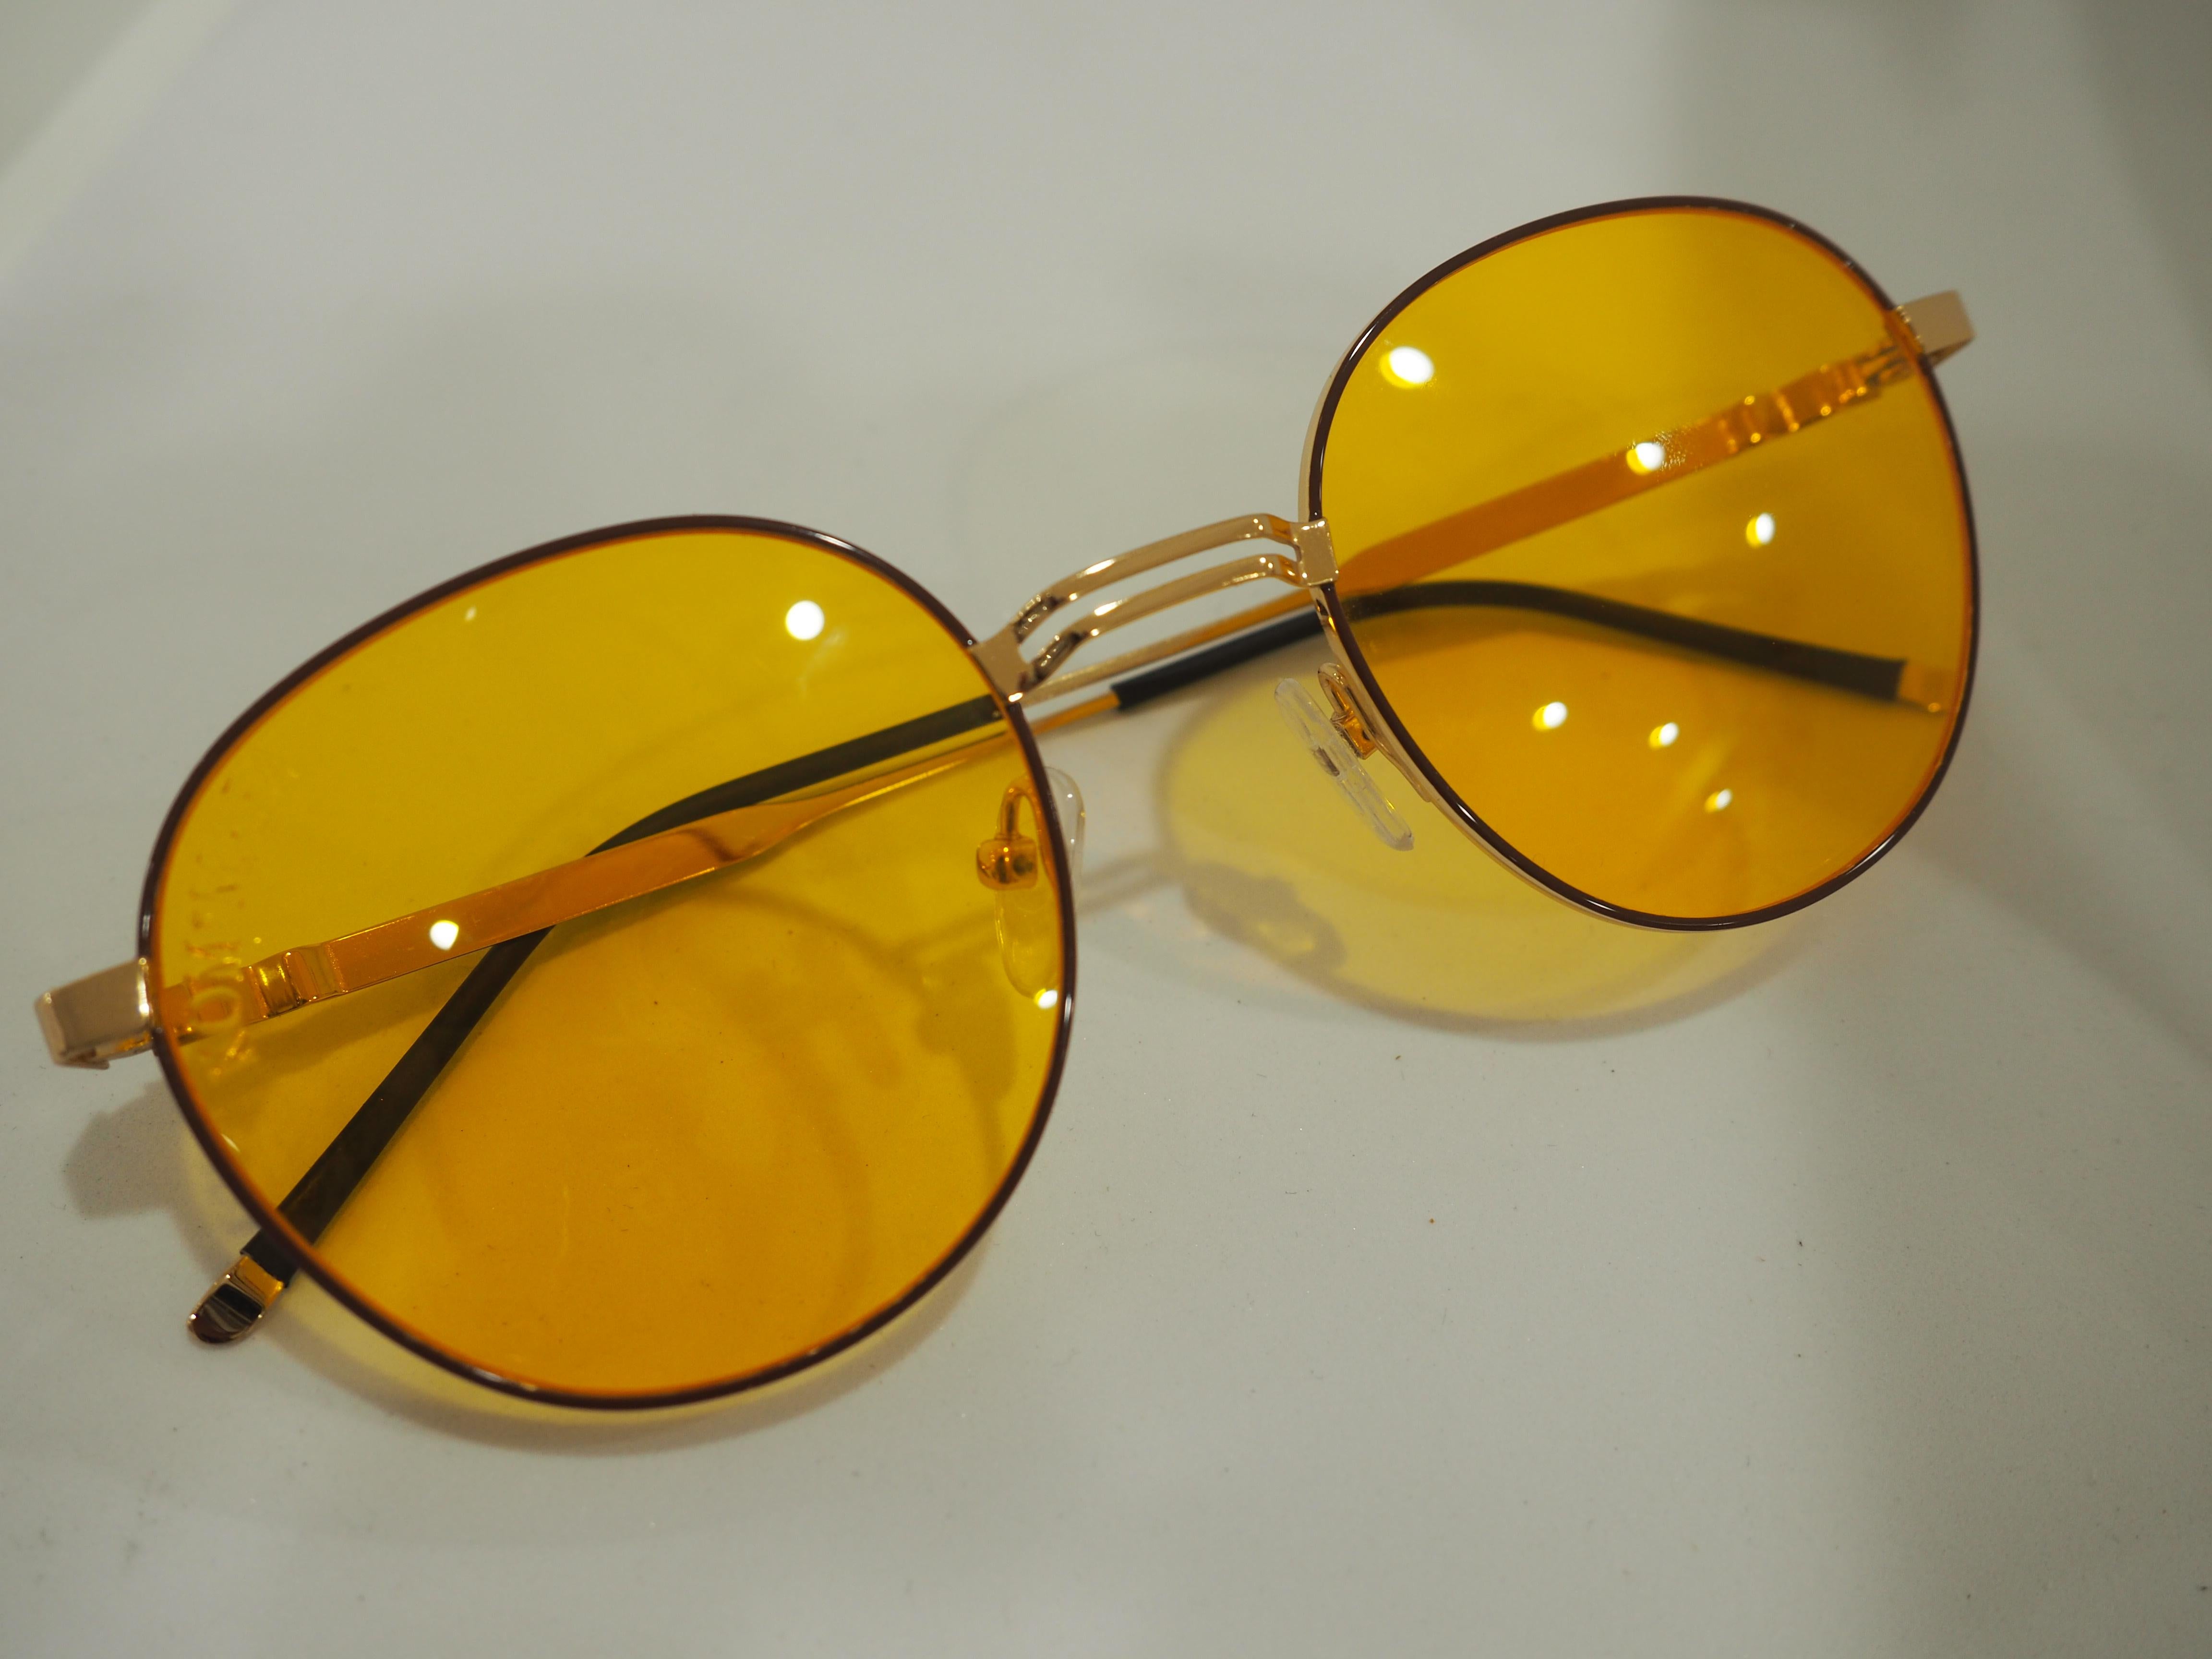 Kommafa orange sunglasses
totally made in italy 
one of a kind